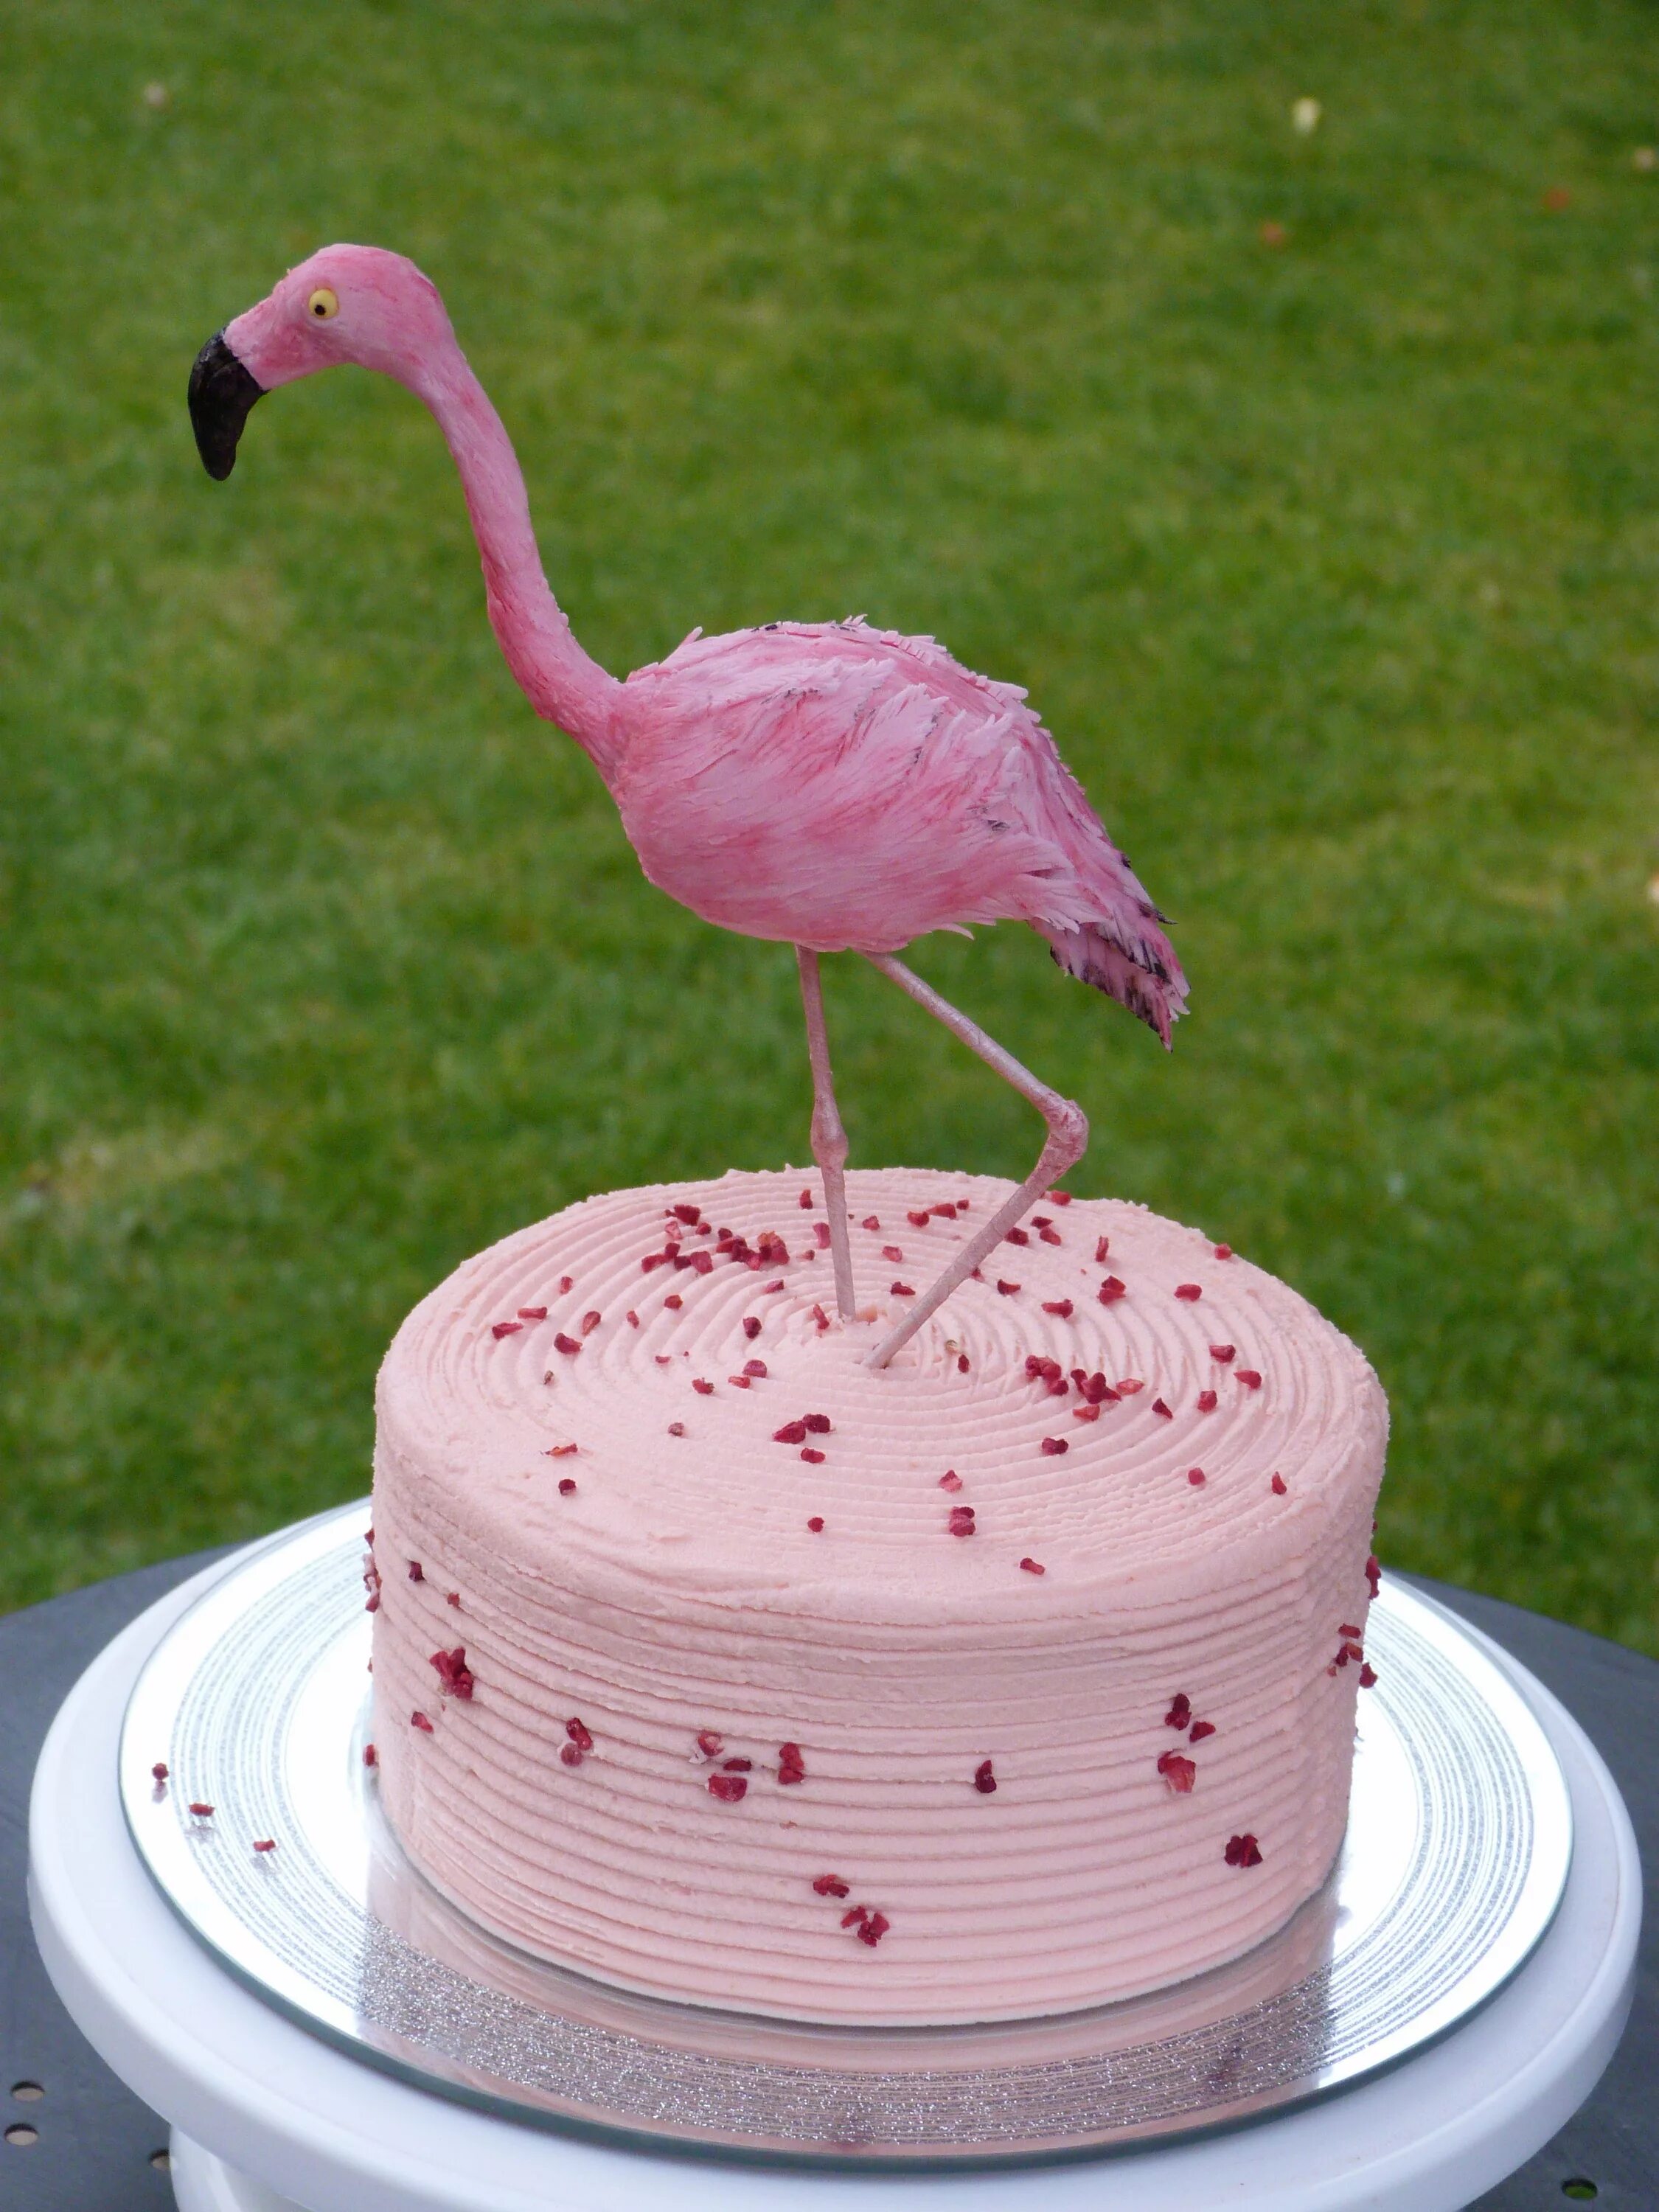 Торт фламинго. Торт розовый Фламинго. Бентон торт розовый Фламинго. Розовый торт. Тортик с Фламинго.